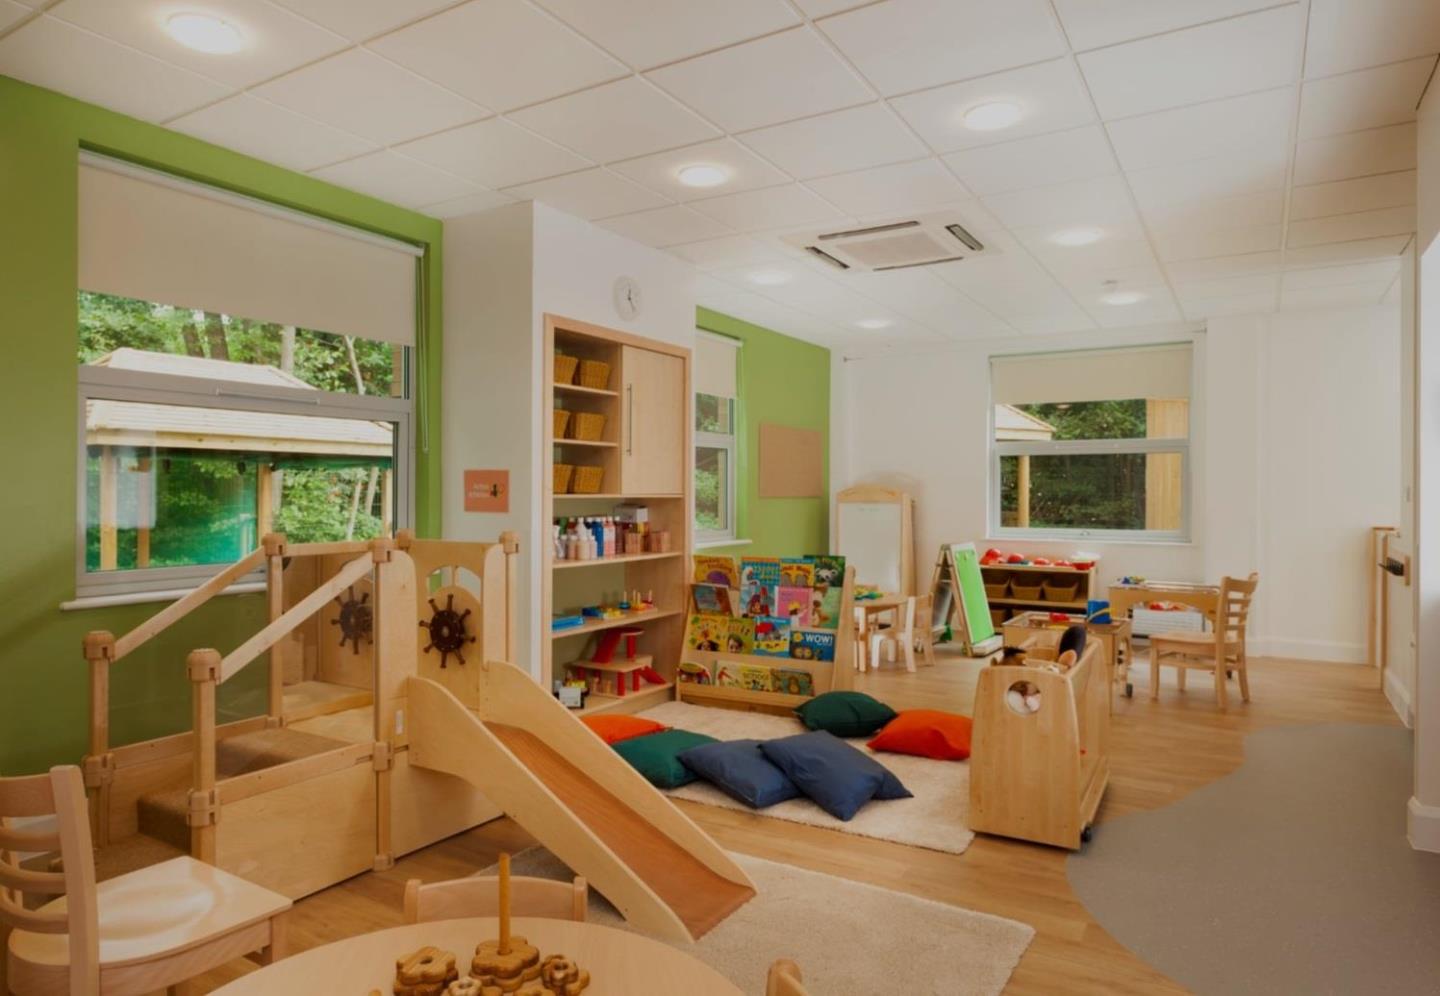 Images Bright Horizons Crawley Day Nursery and Preschool